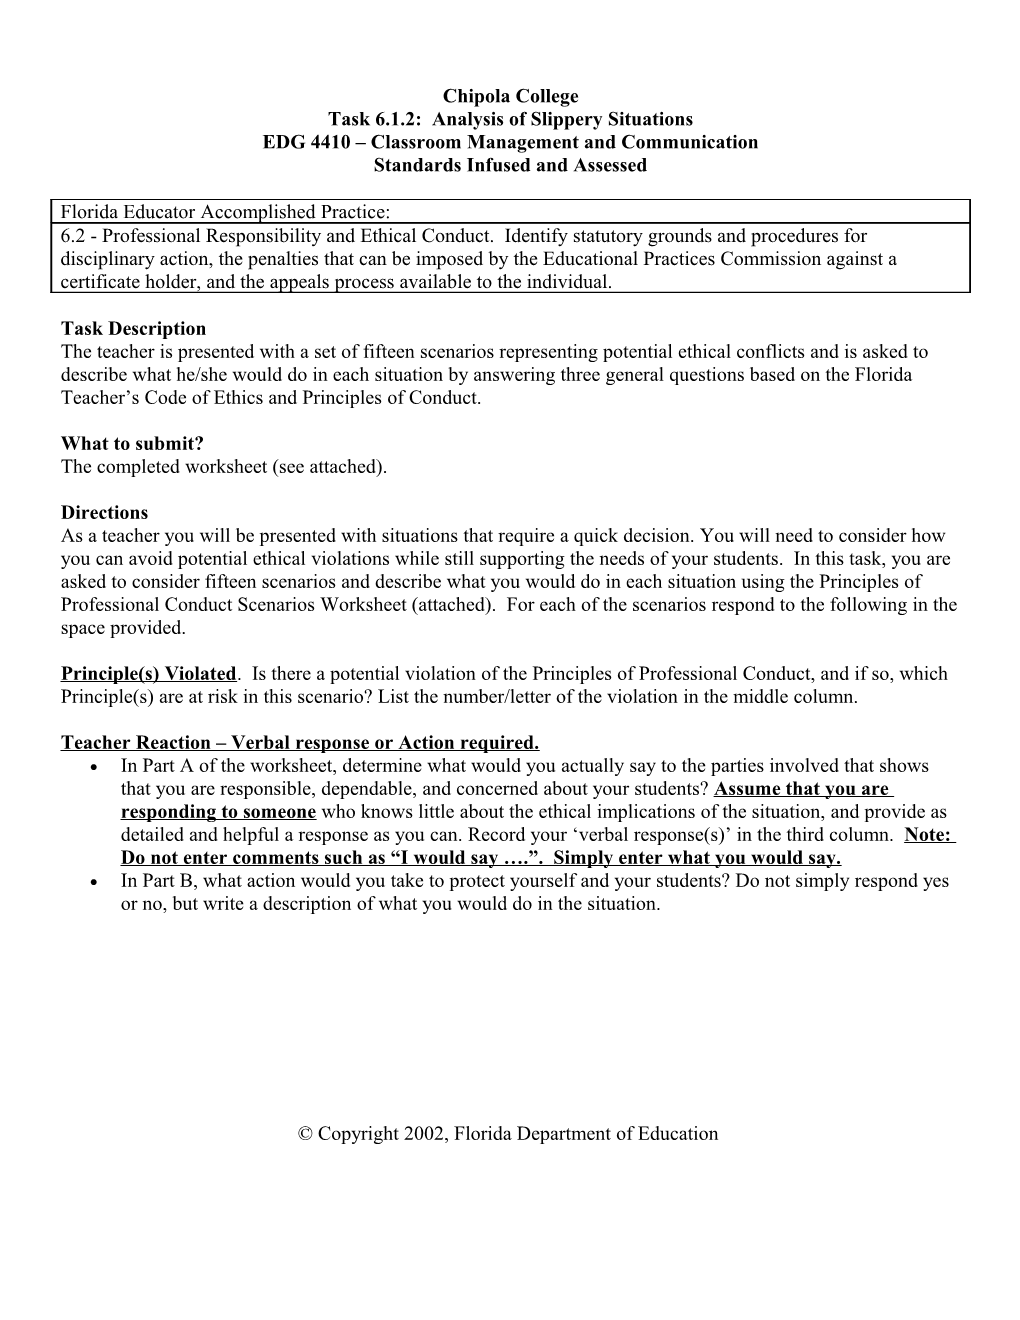 Ethics - Assessment System Product/Performance Tasks